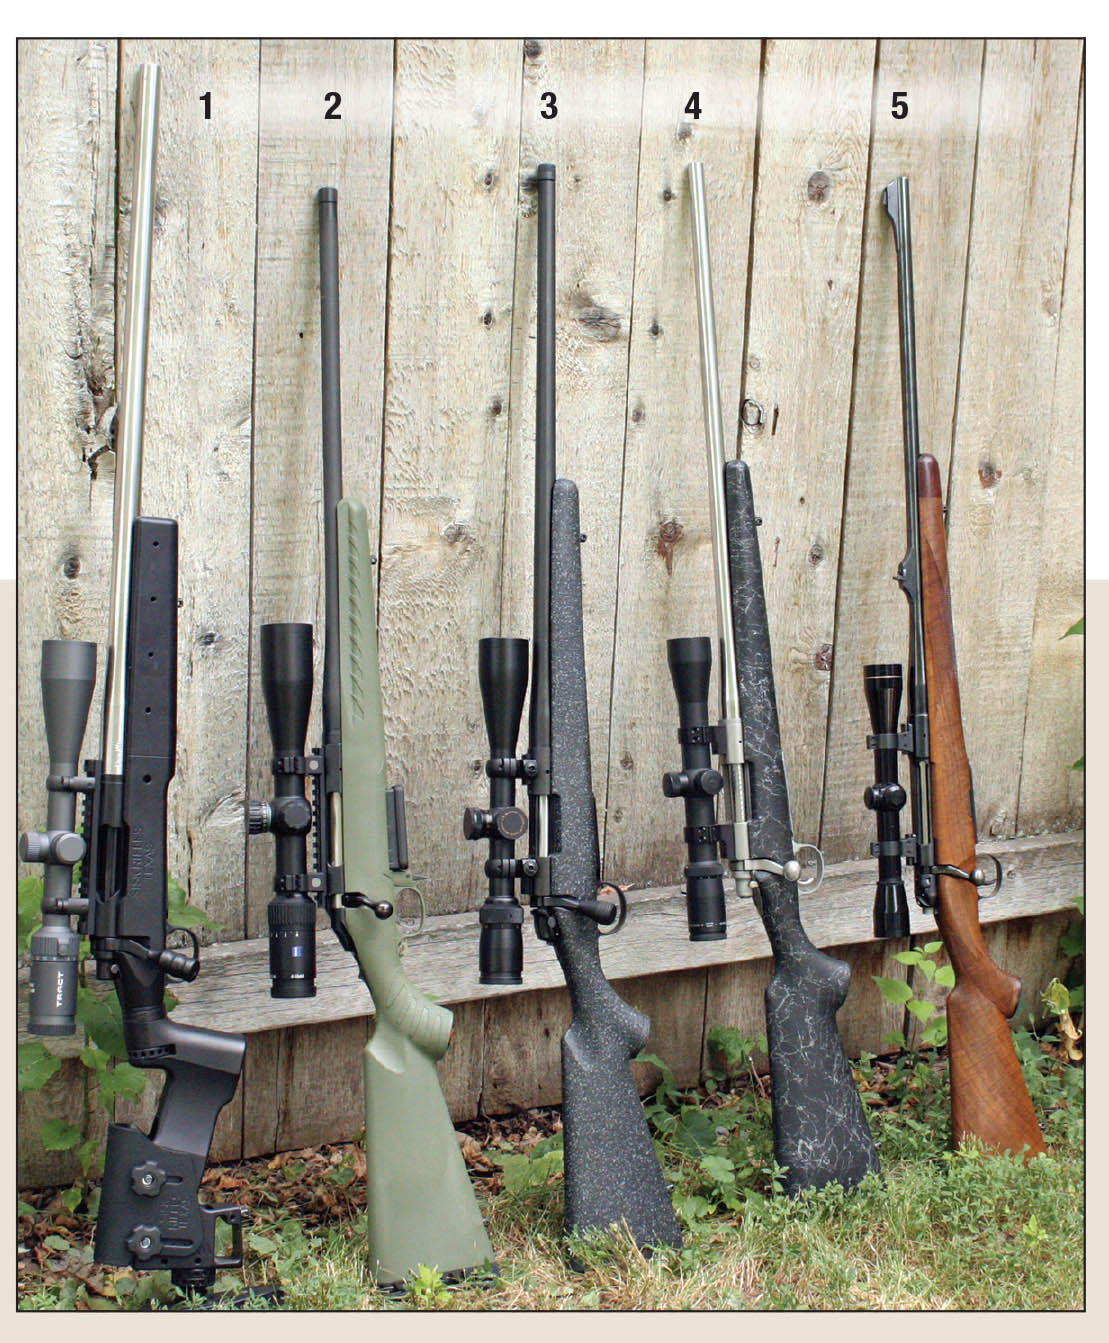 Test rifles include a (1) Custom Sisk 6XC, (2) Ruger American Rifle Predator 6mm Creedmoor, (3) Bergara B-14 Ridge 6.5 Creedmoor, (4) Custom Sisk 6.5 PRC and a (5) Heym SR-21 .300 Winchester Magnum.